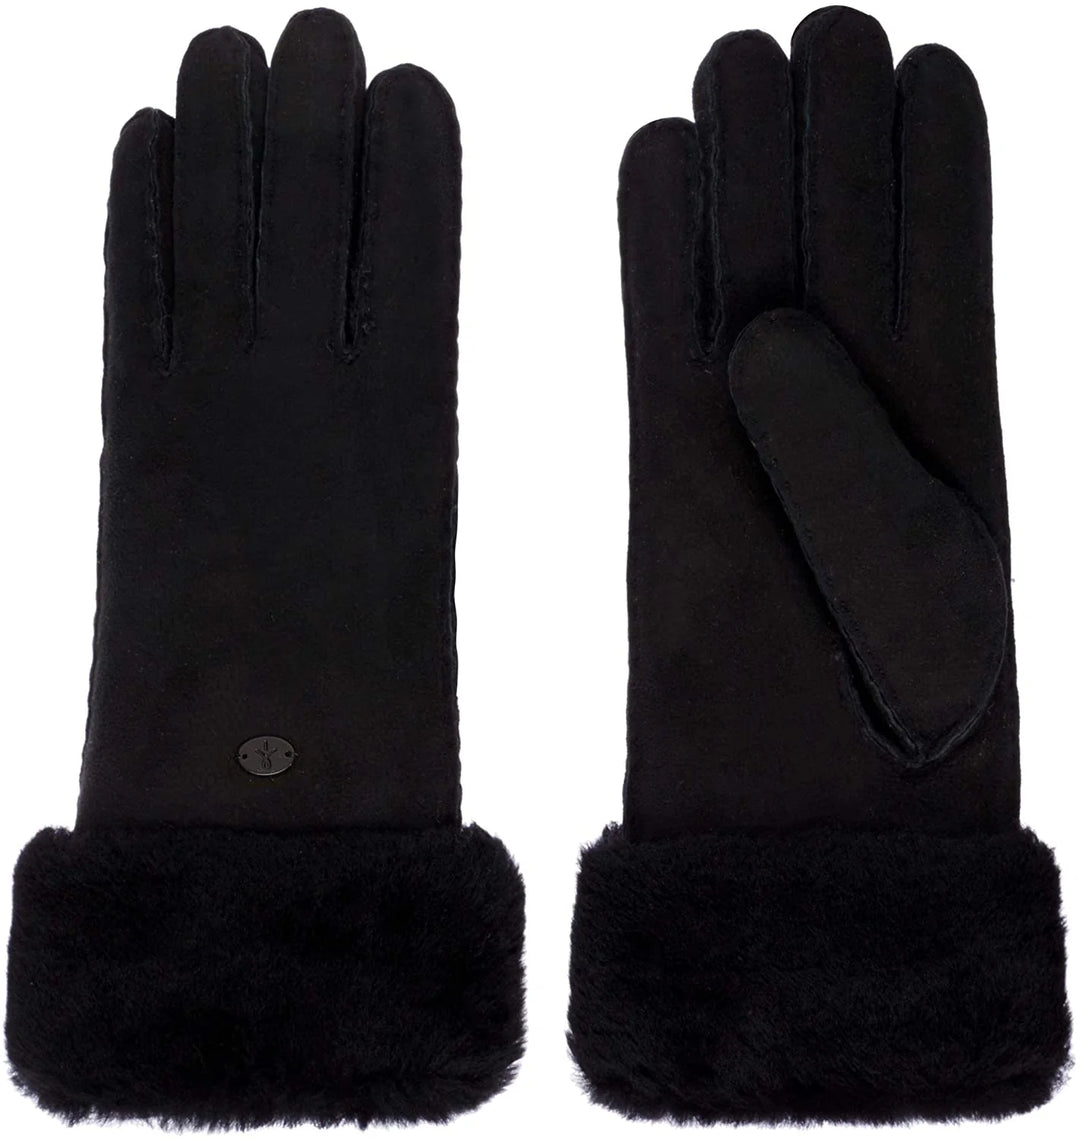 Apollo Bay Gloves - Black | Emu Australia - Clearance